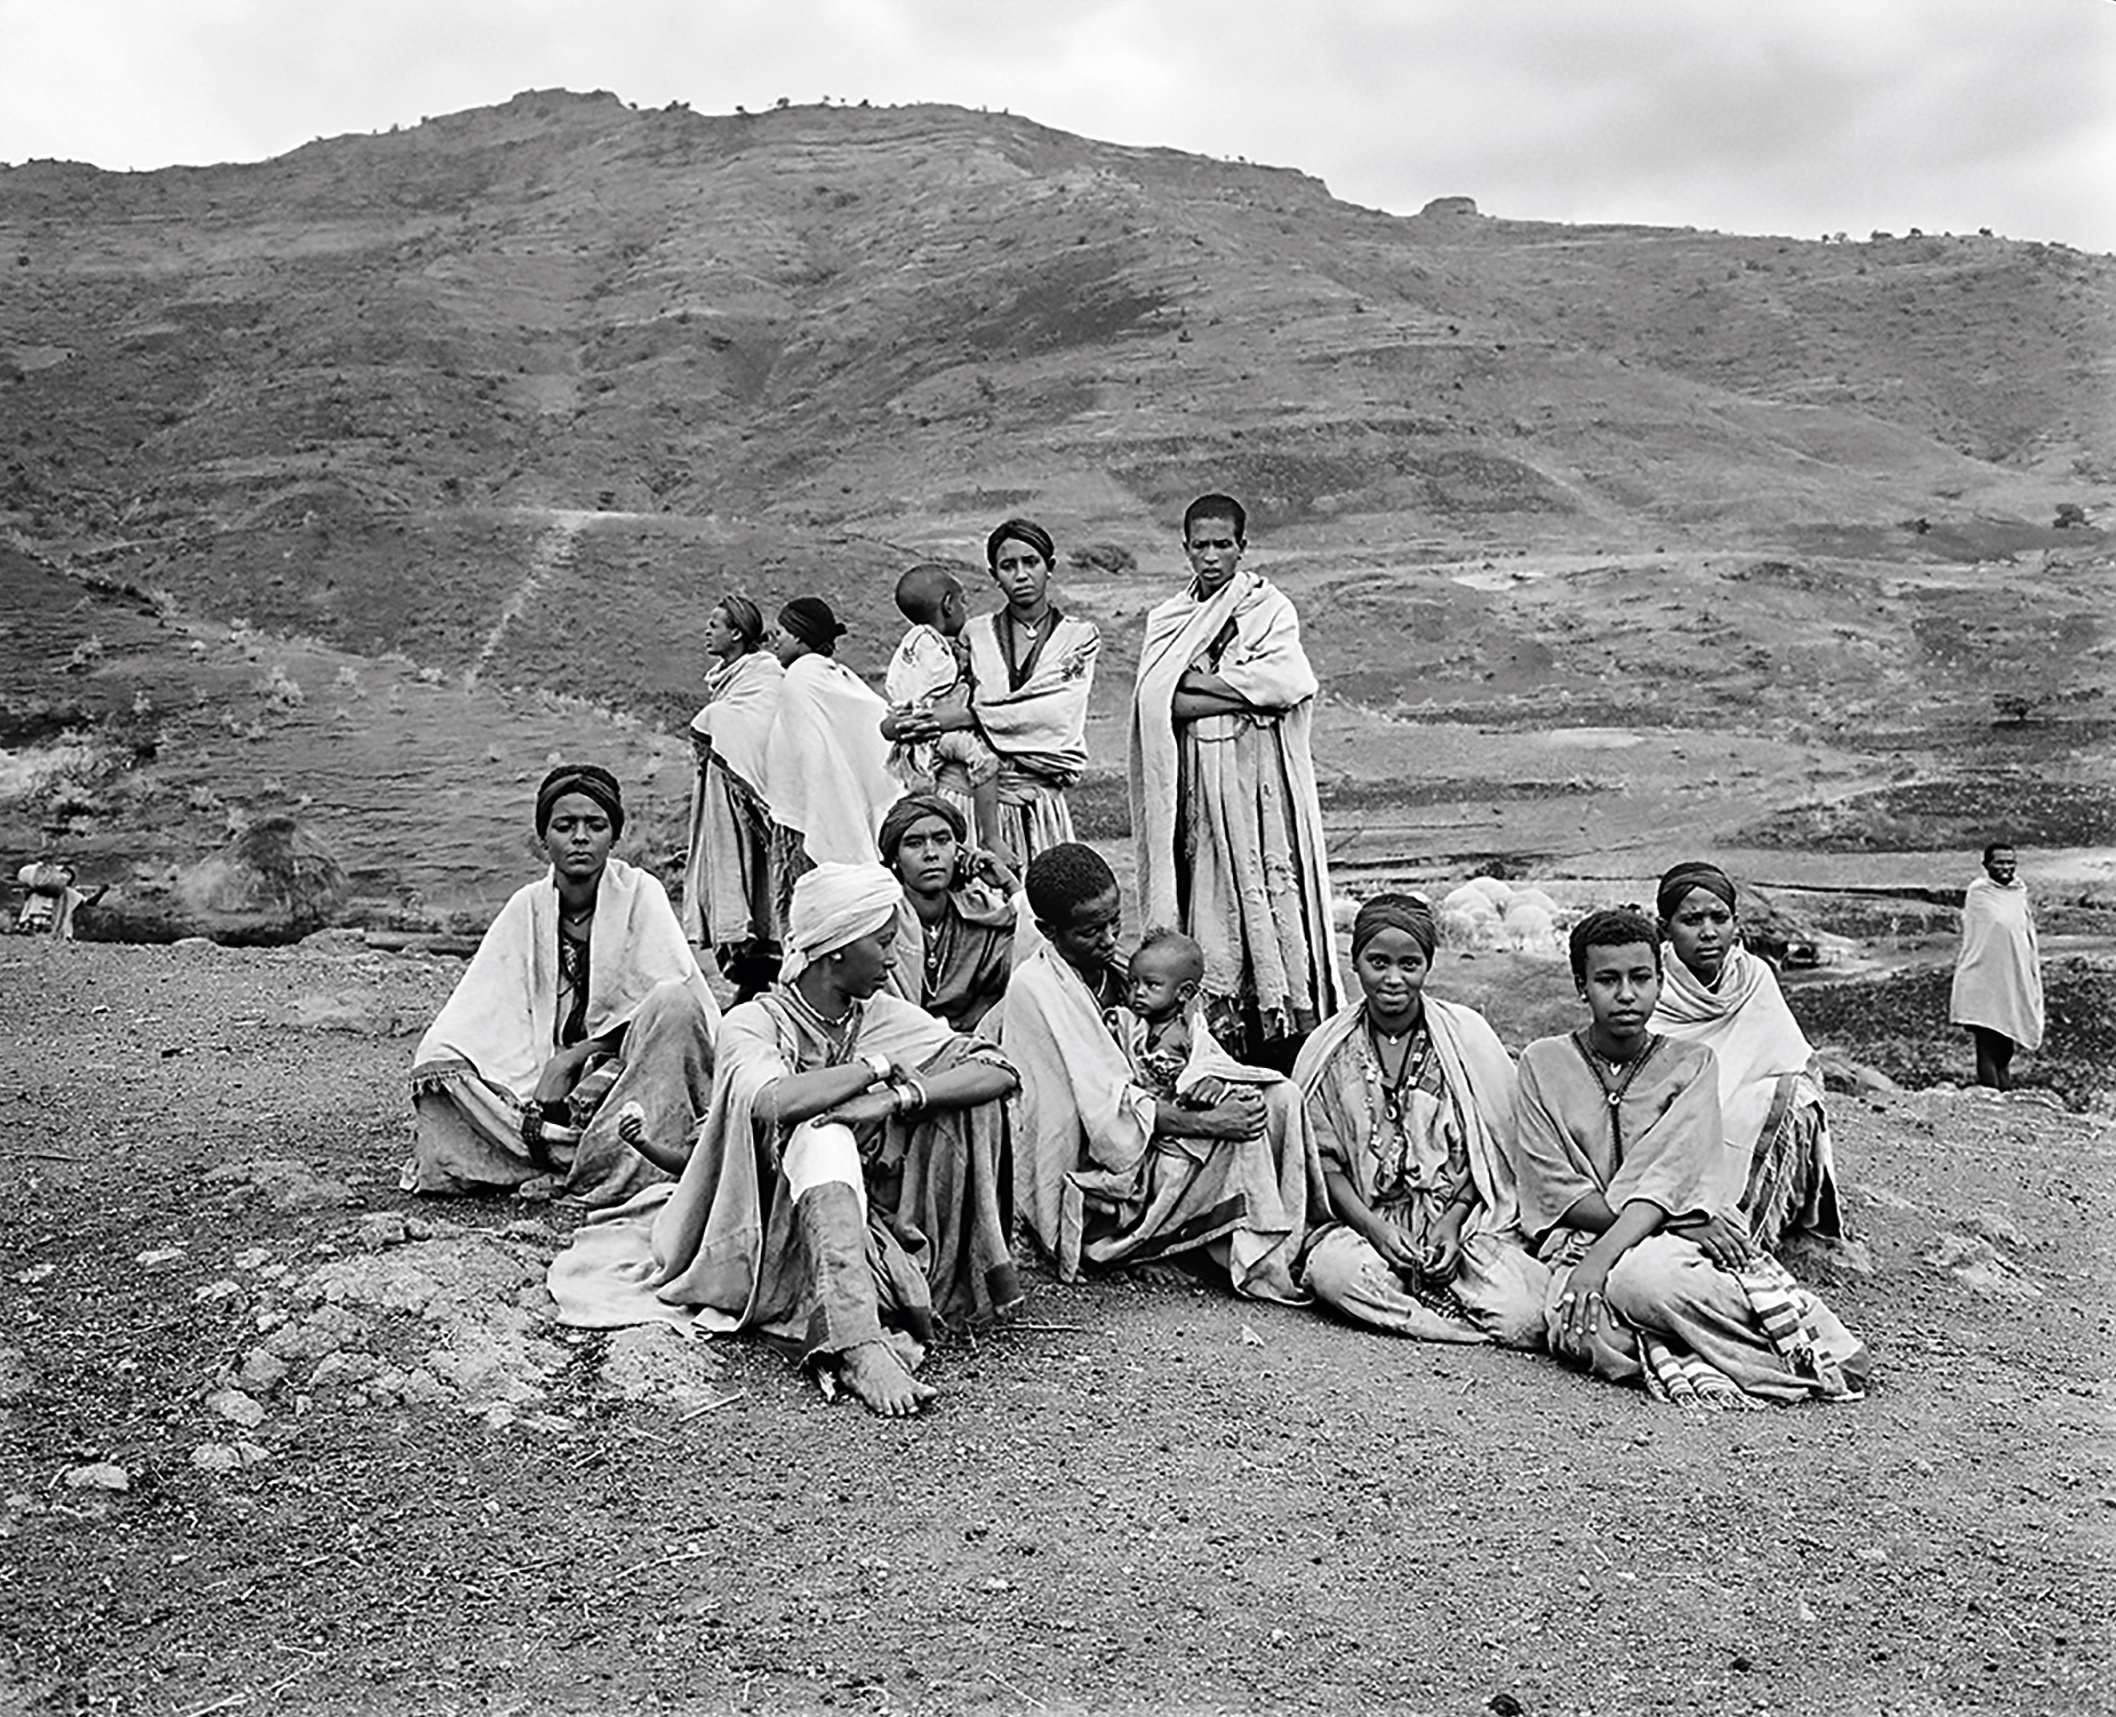  Showada, Ethiopia, 1983 